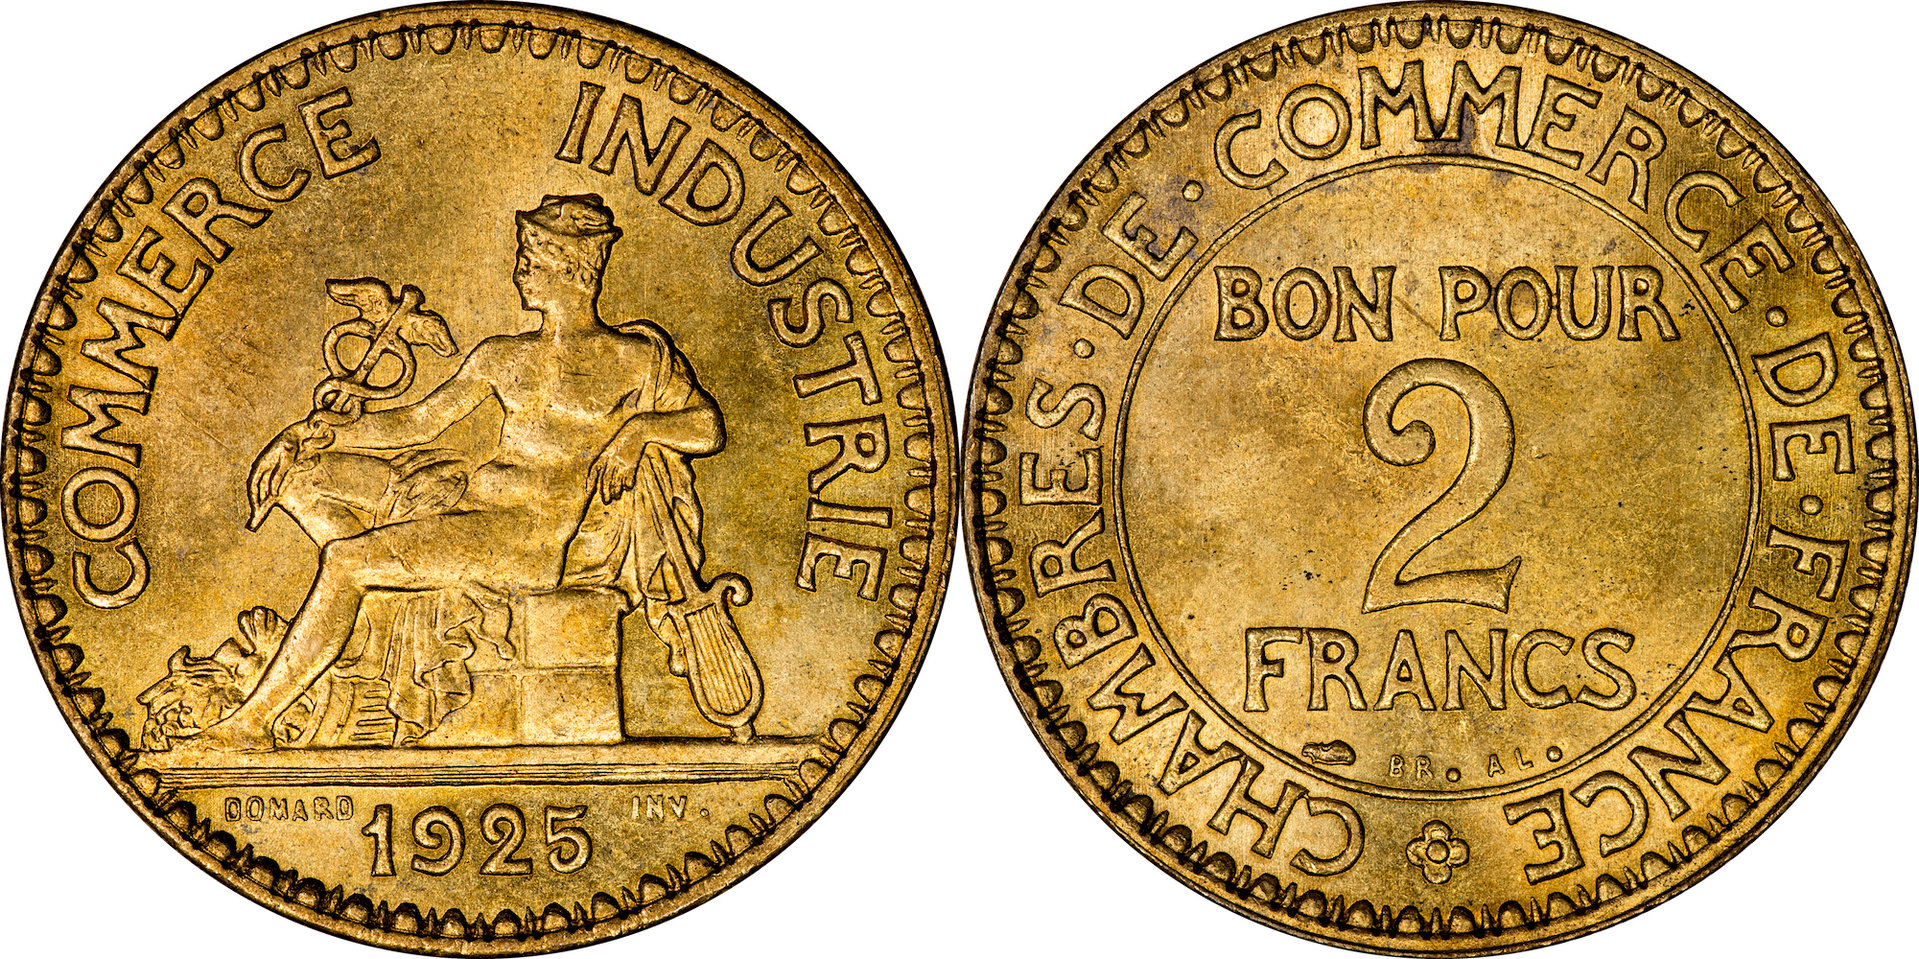 France - 1925 2 Francs.jpg